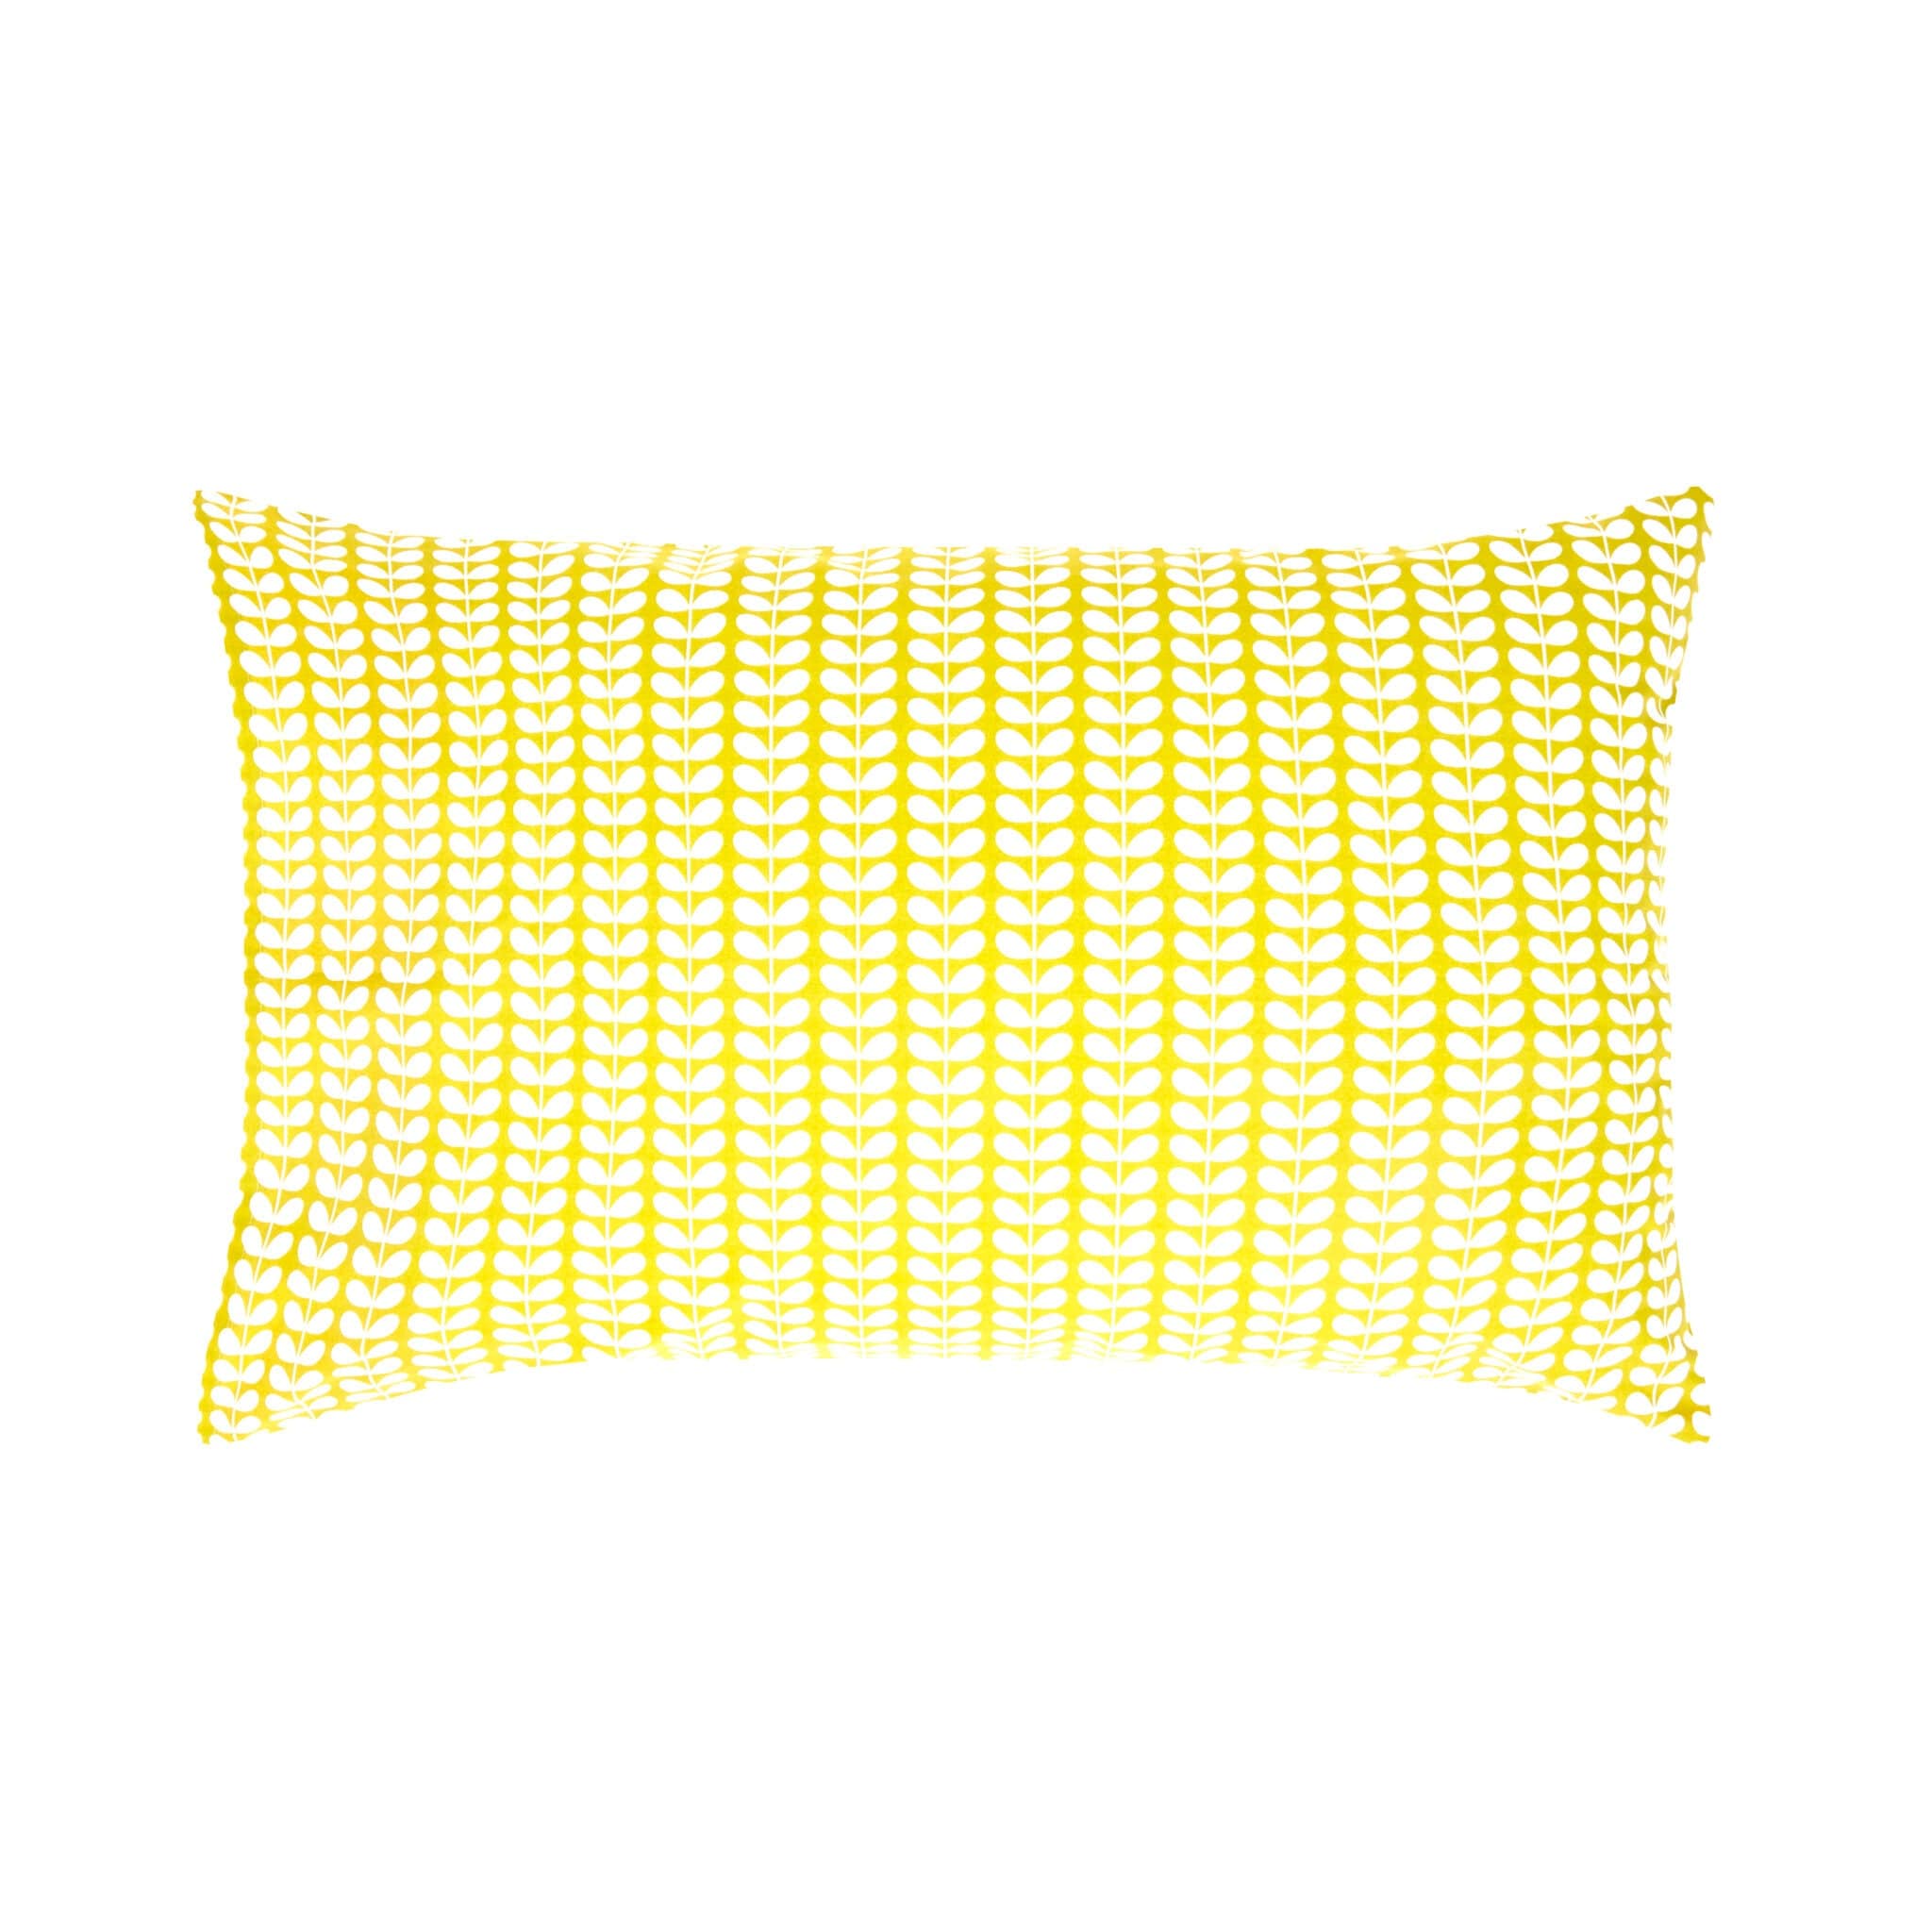 Ashley Wilde Interior Design Range Tiny Stem Yellow Bedding by Orla Kiely